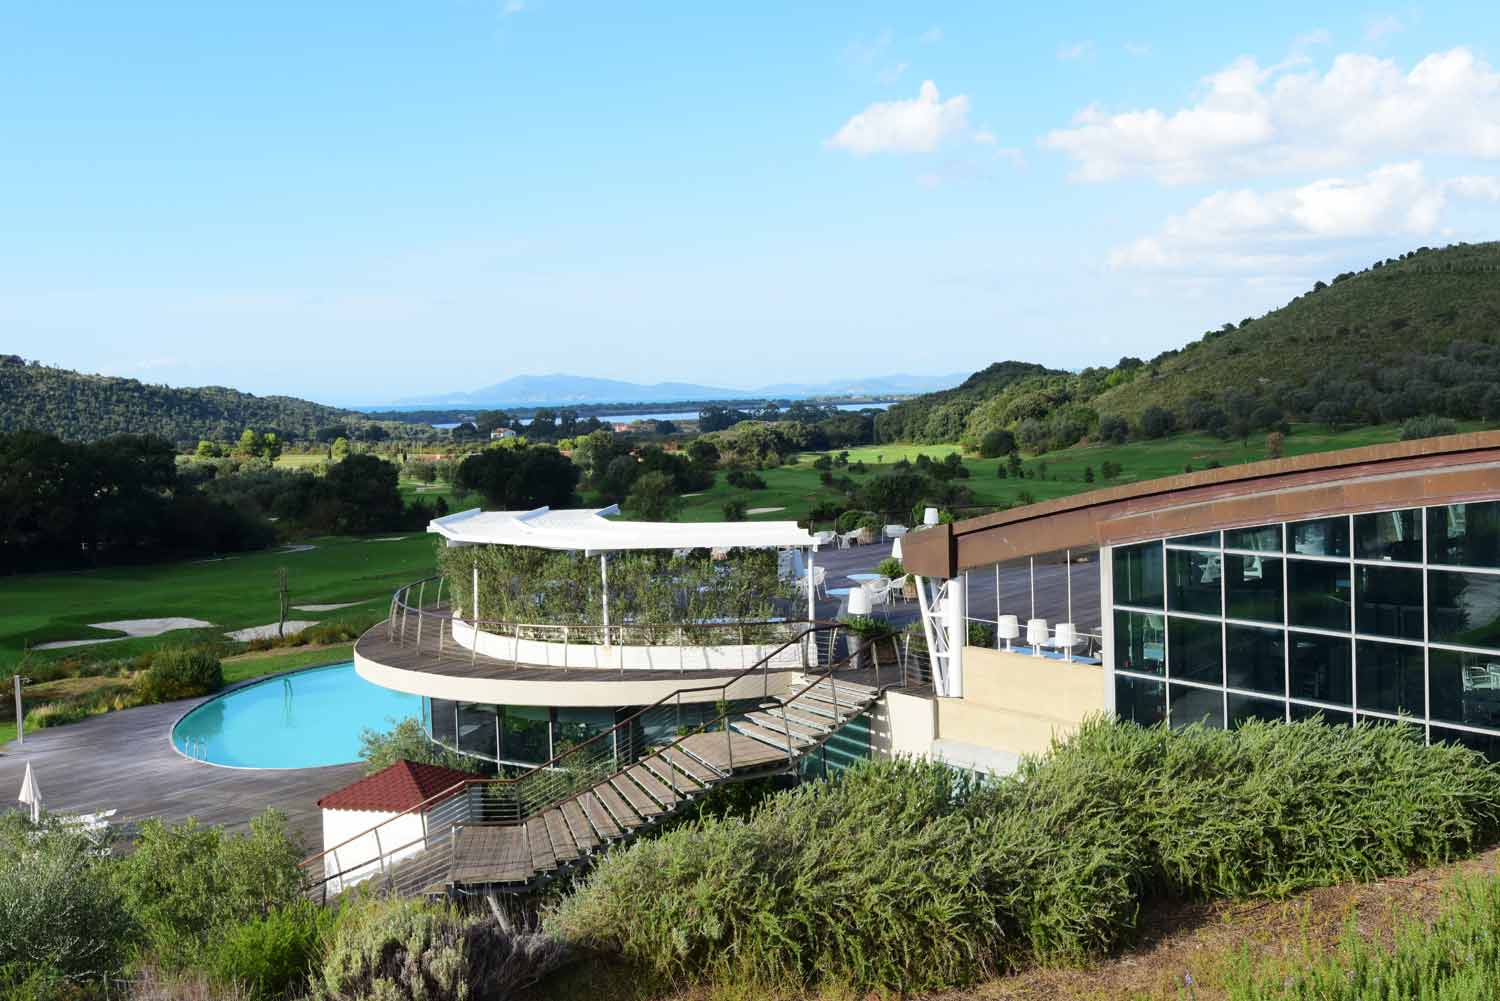 Argentario Golf & Resort, Tuscany : Five Star Alliance